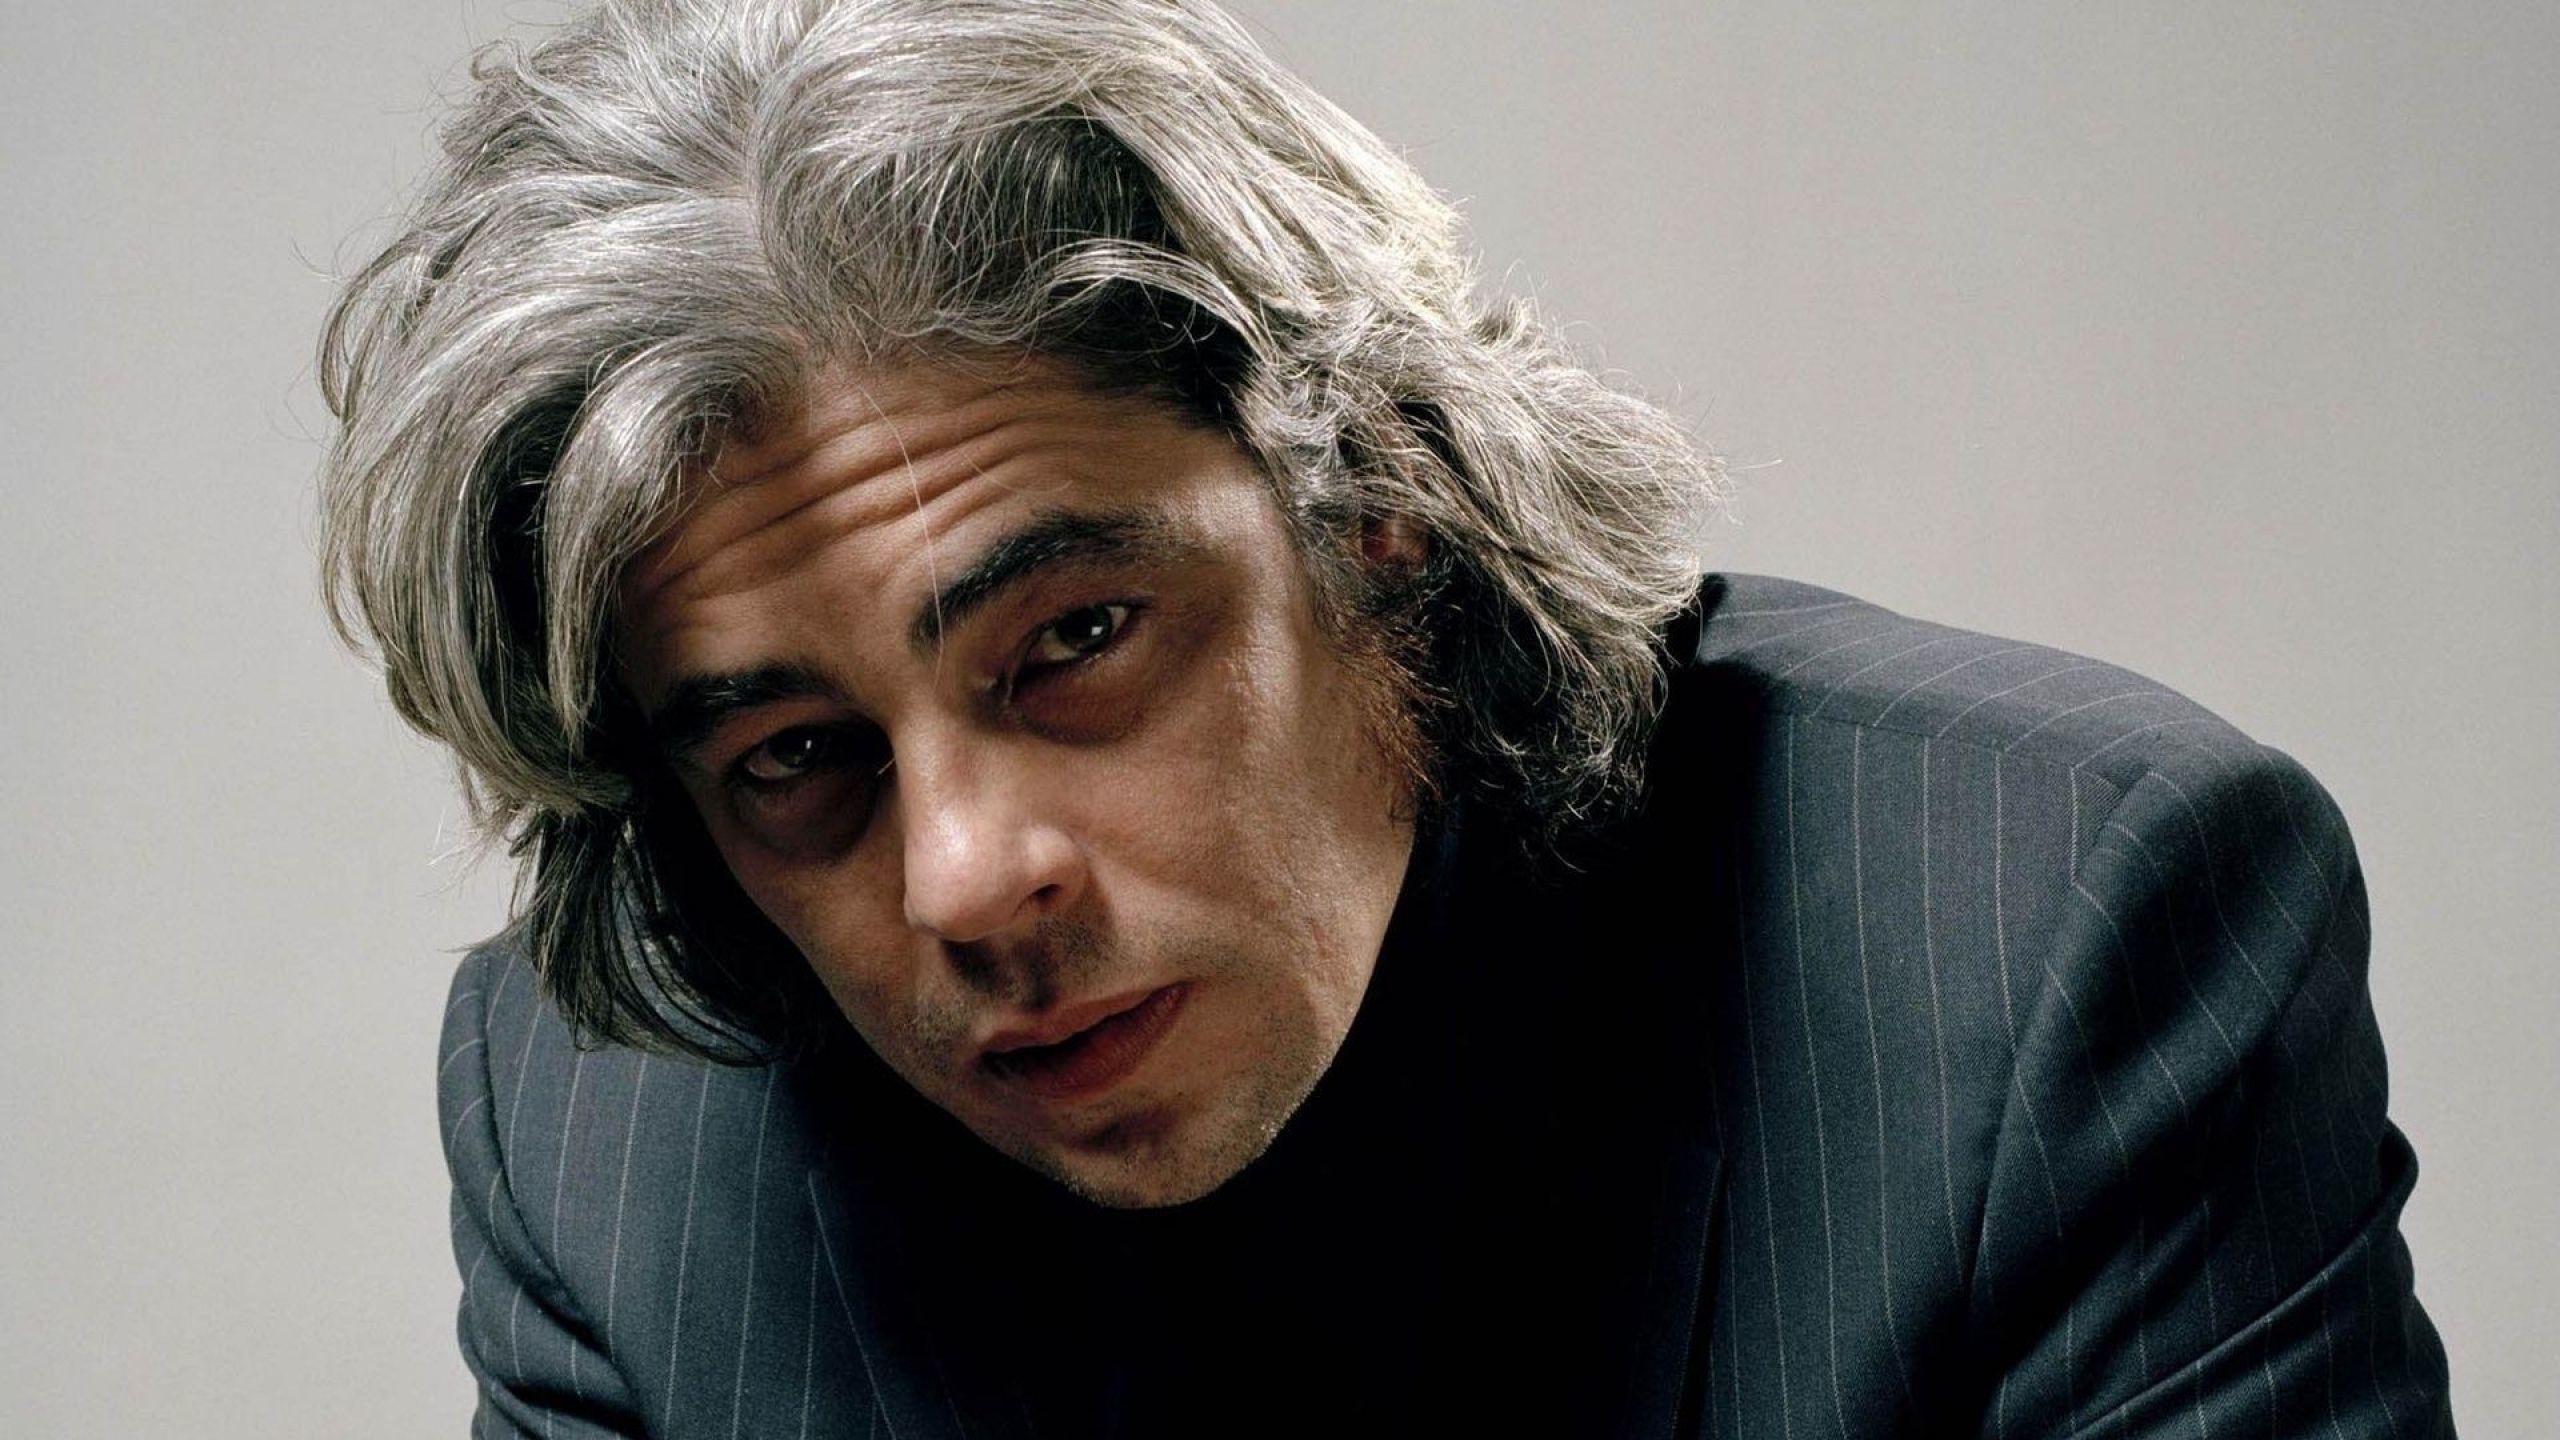 Download Wallpaper 2560x1440 Benicio Del Toro, Actor, Gray Haired